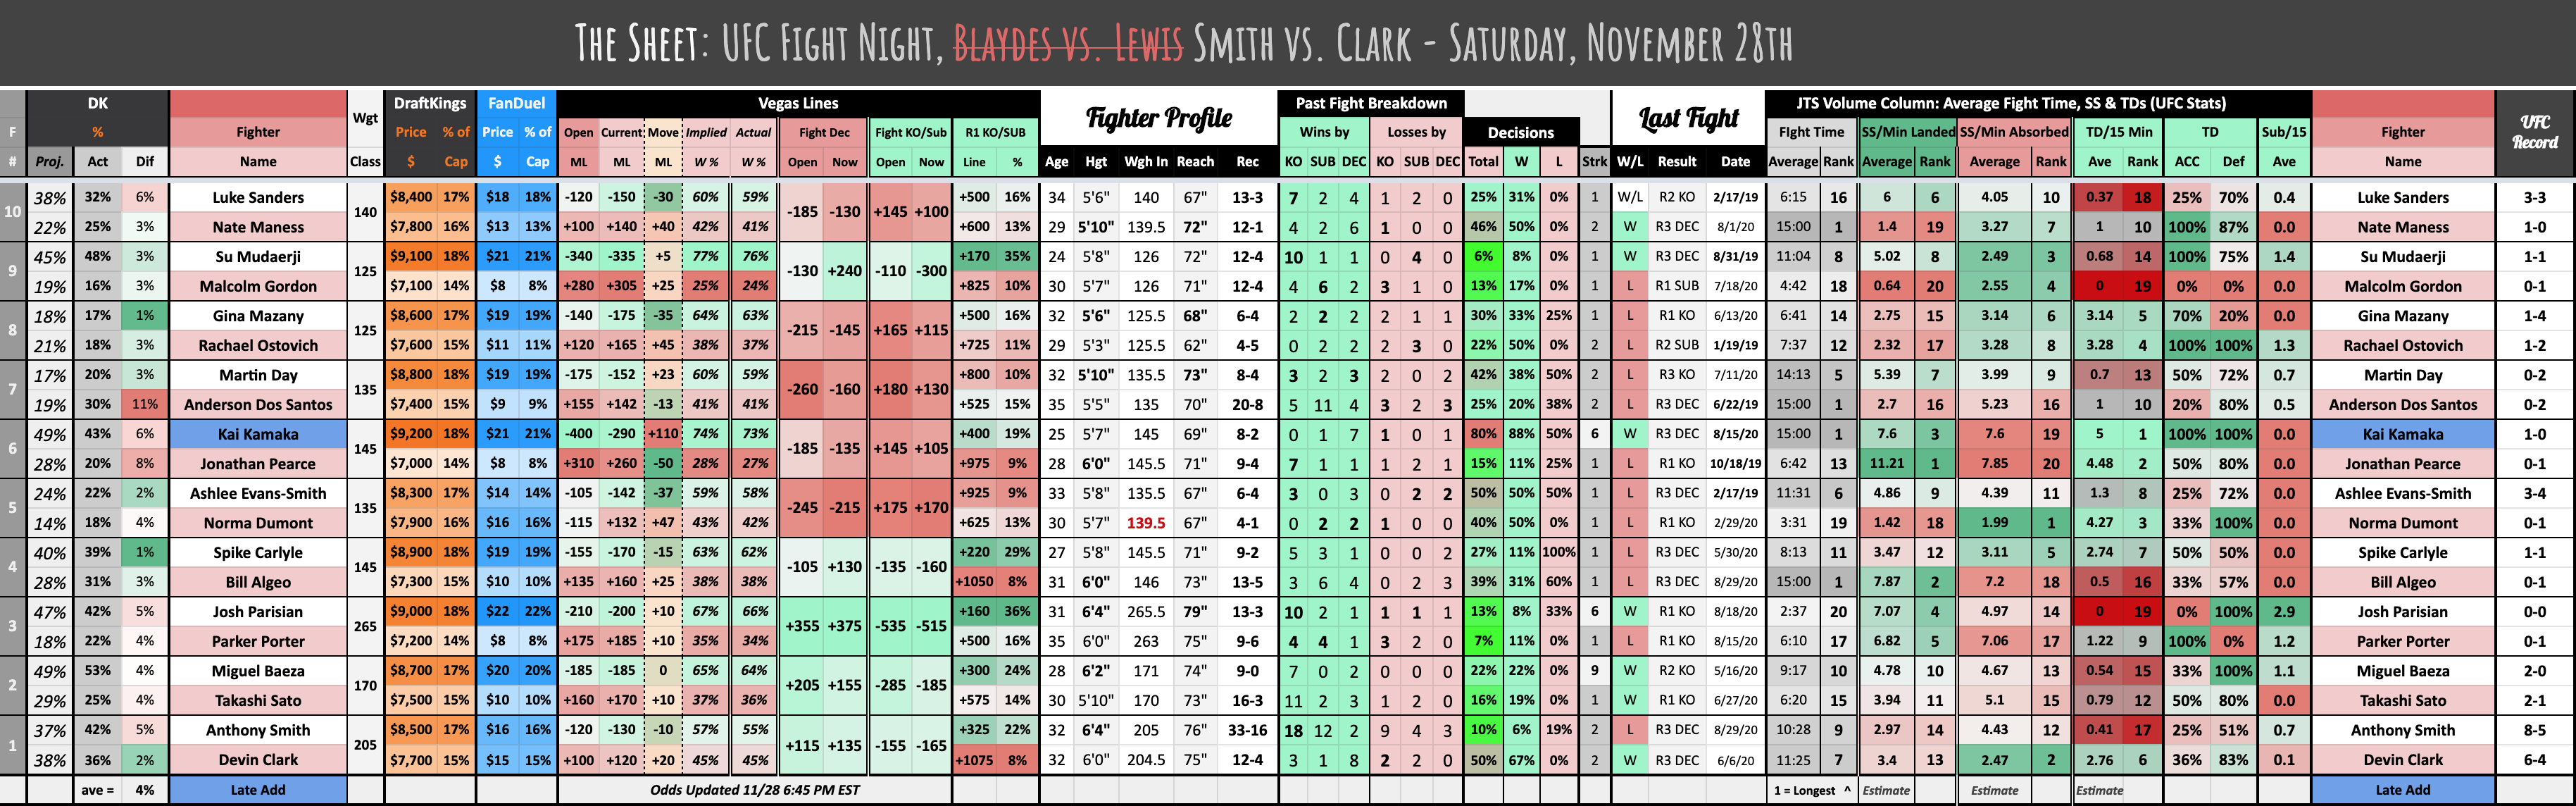 The Sheet: UFC Fight Night, Smith vs. Clark - Saturday, November 28th